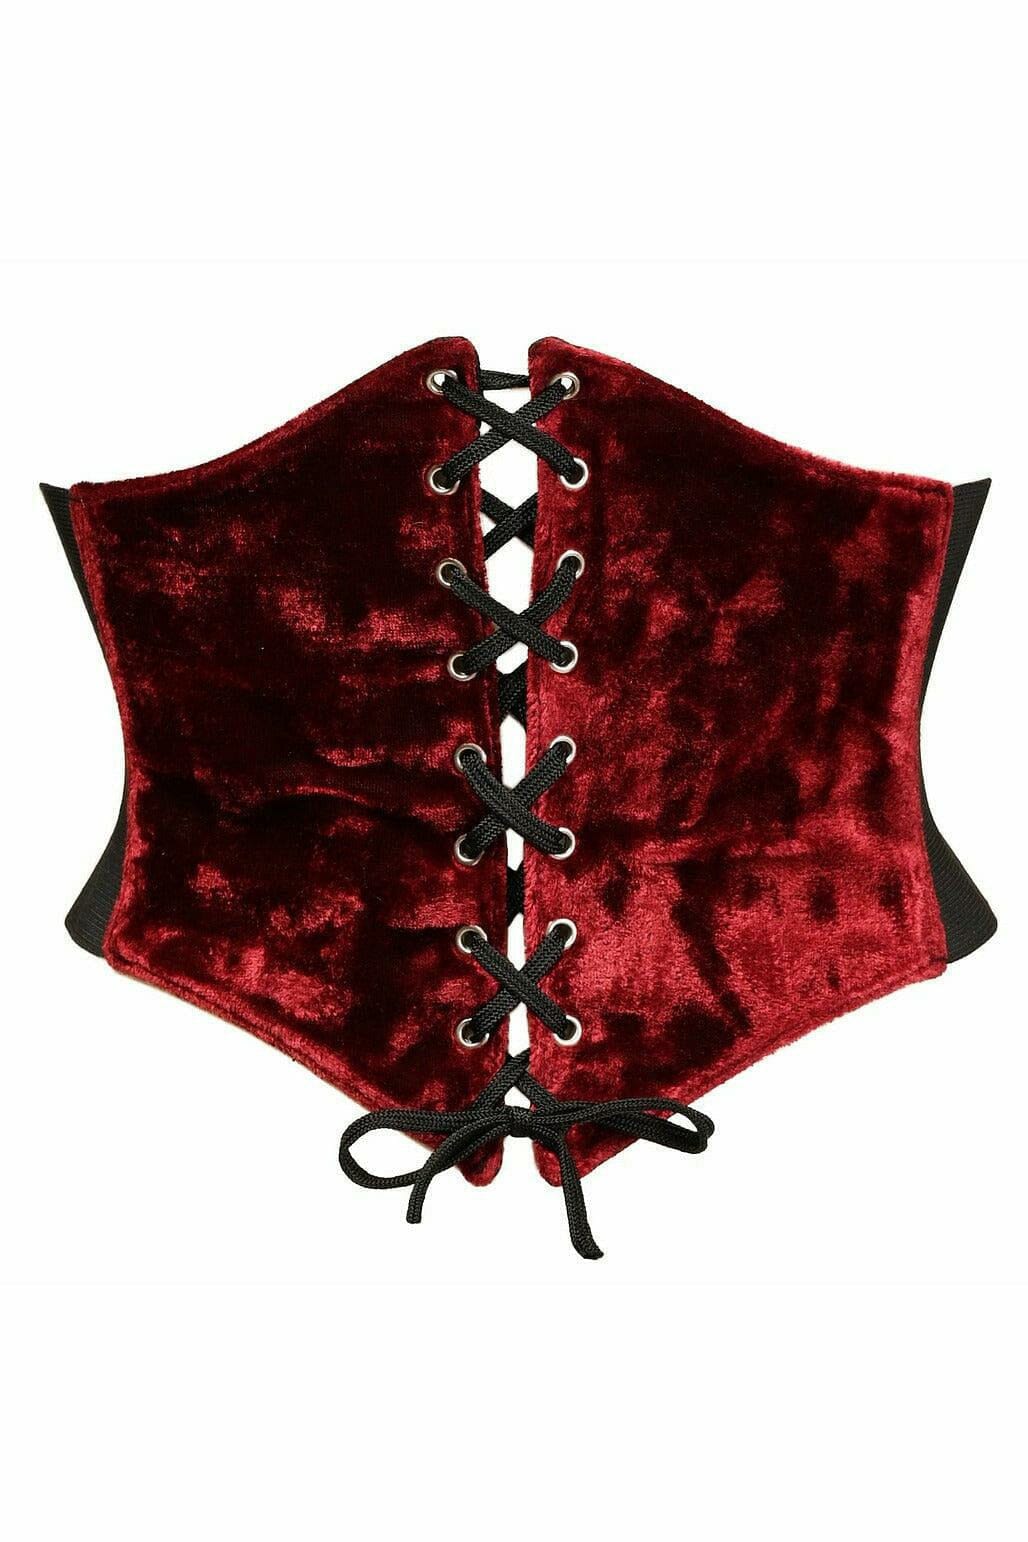 Lavish Dark Red Crushed Velvet Corset Belt Cincher-Corset Belts-Daisy Corsets-Red-S-SEXYSHOES.COM